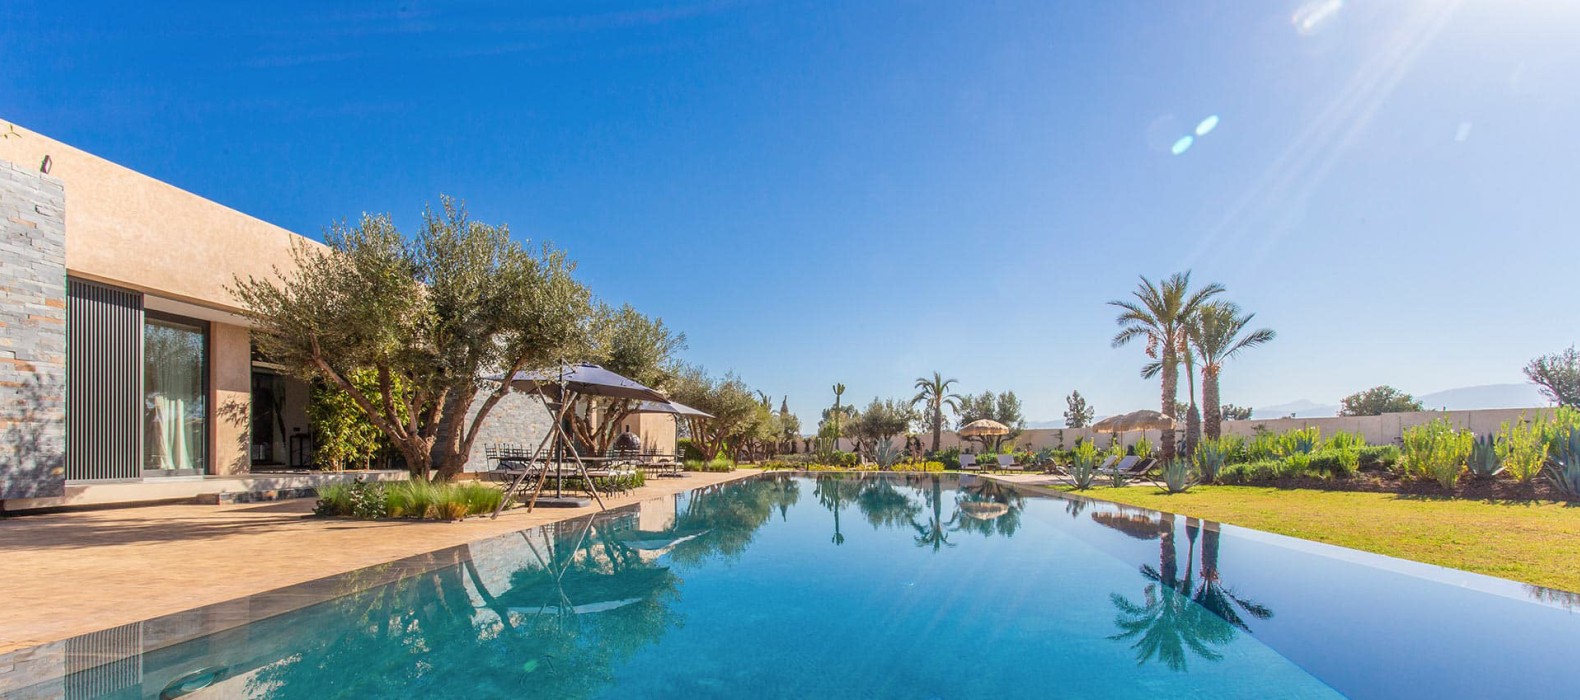 Exterior pool view of Villa Yasmina in Marrakech